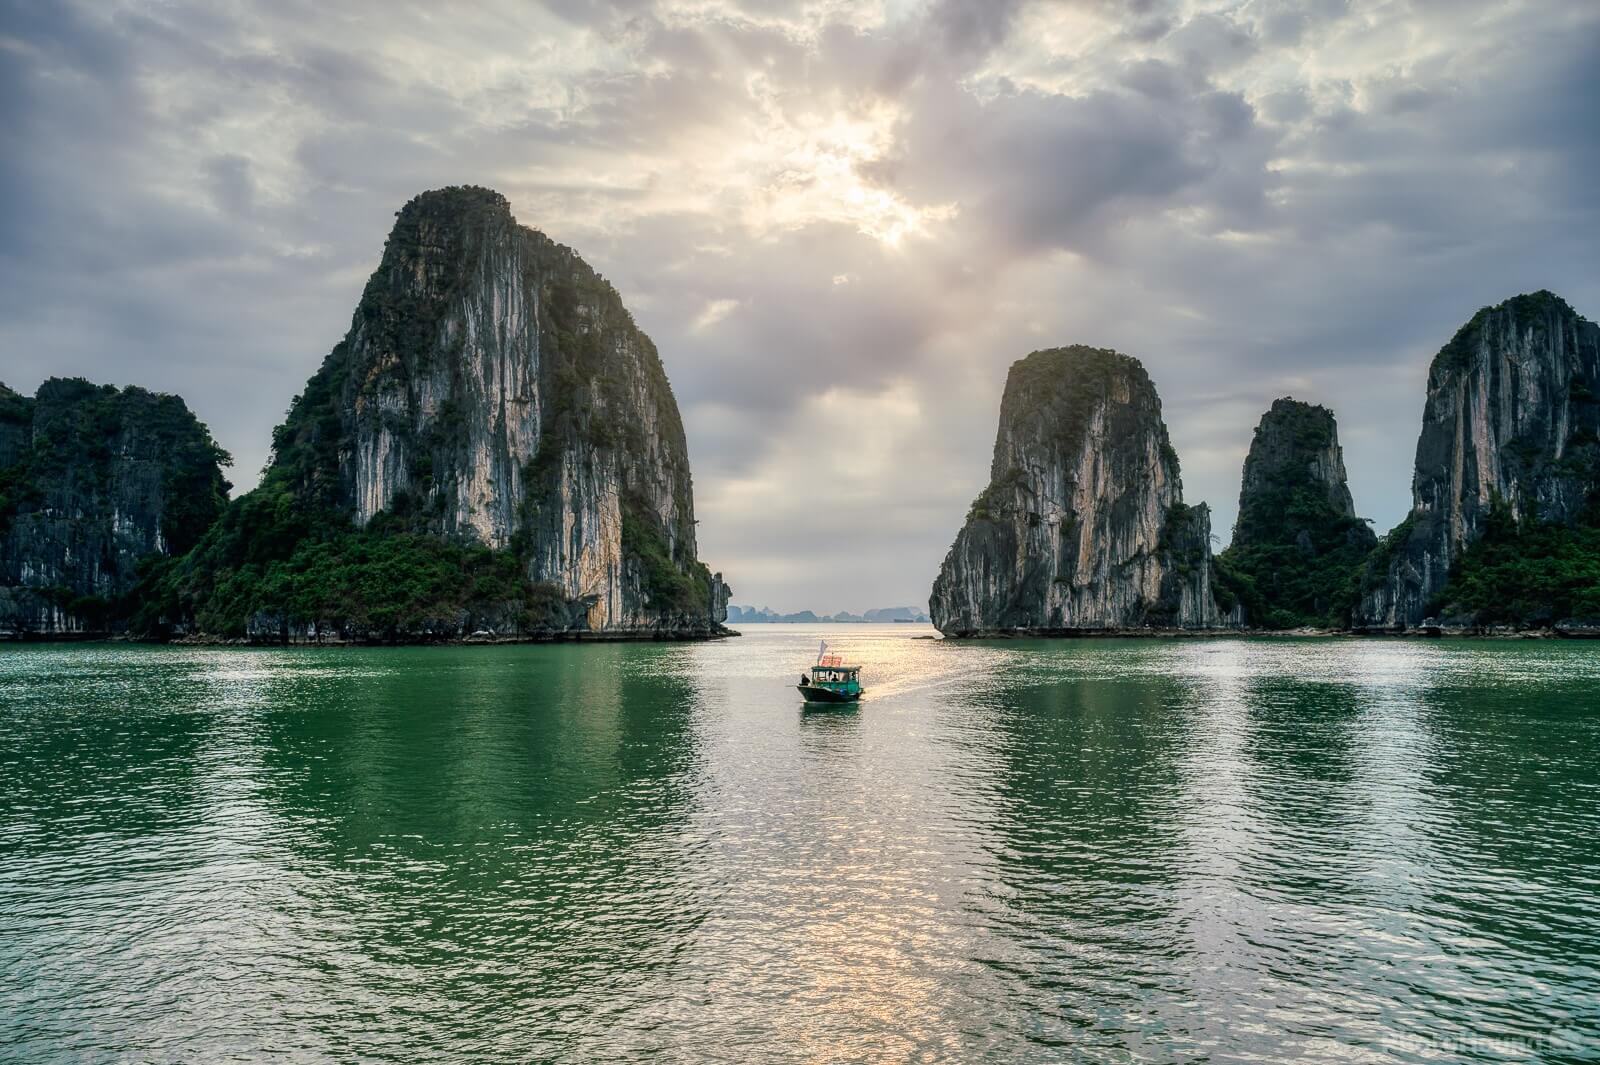 Image of Ha Long Bay, Vietnam by Juraj Zimányi